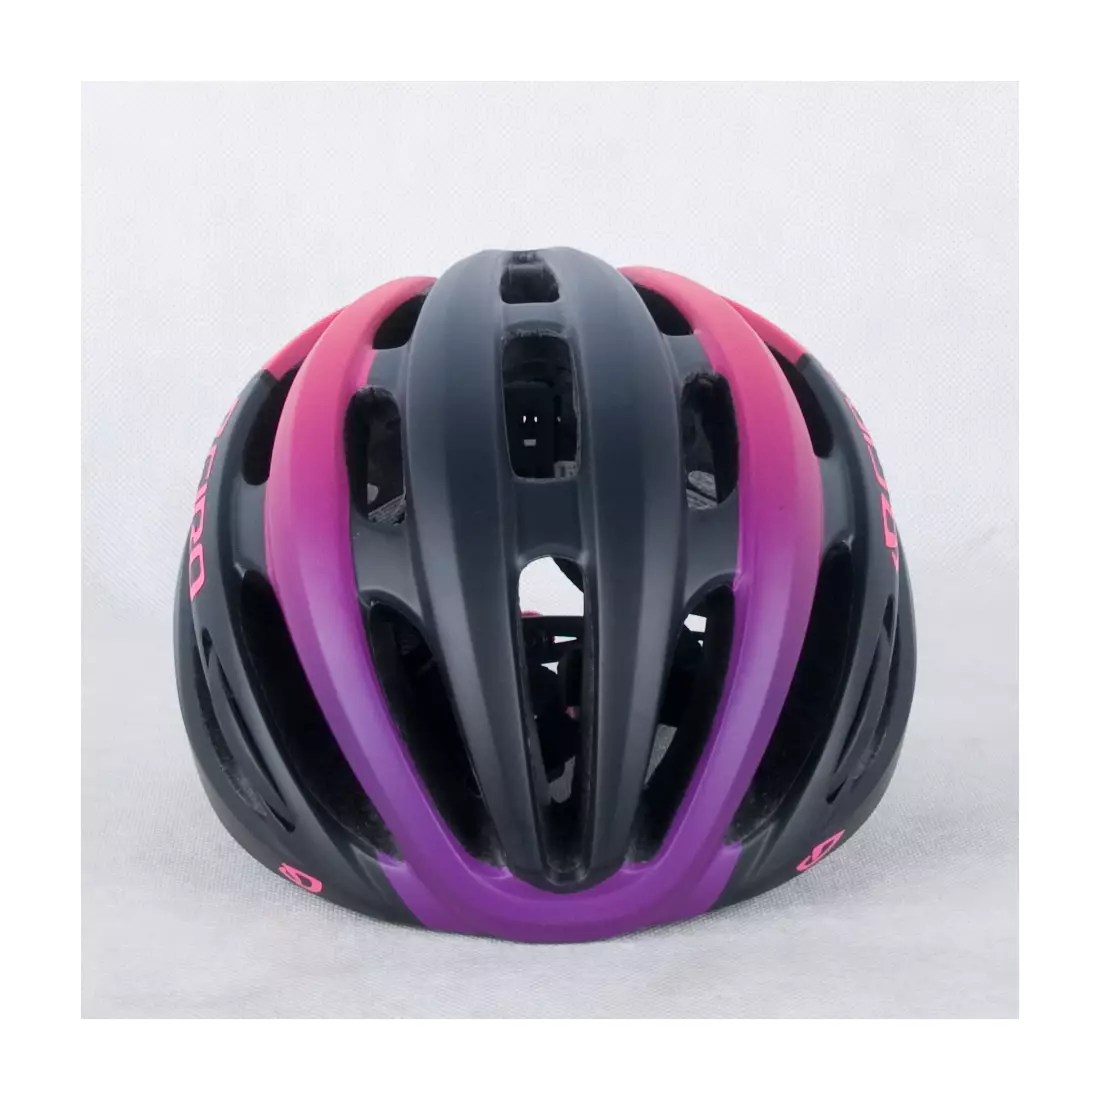 GIRO SAGA - dámská cyklistická přilba, černo-růžová